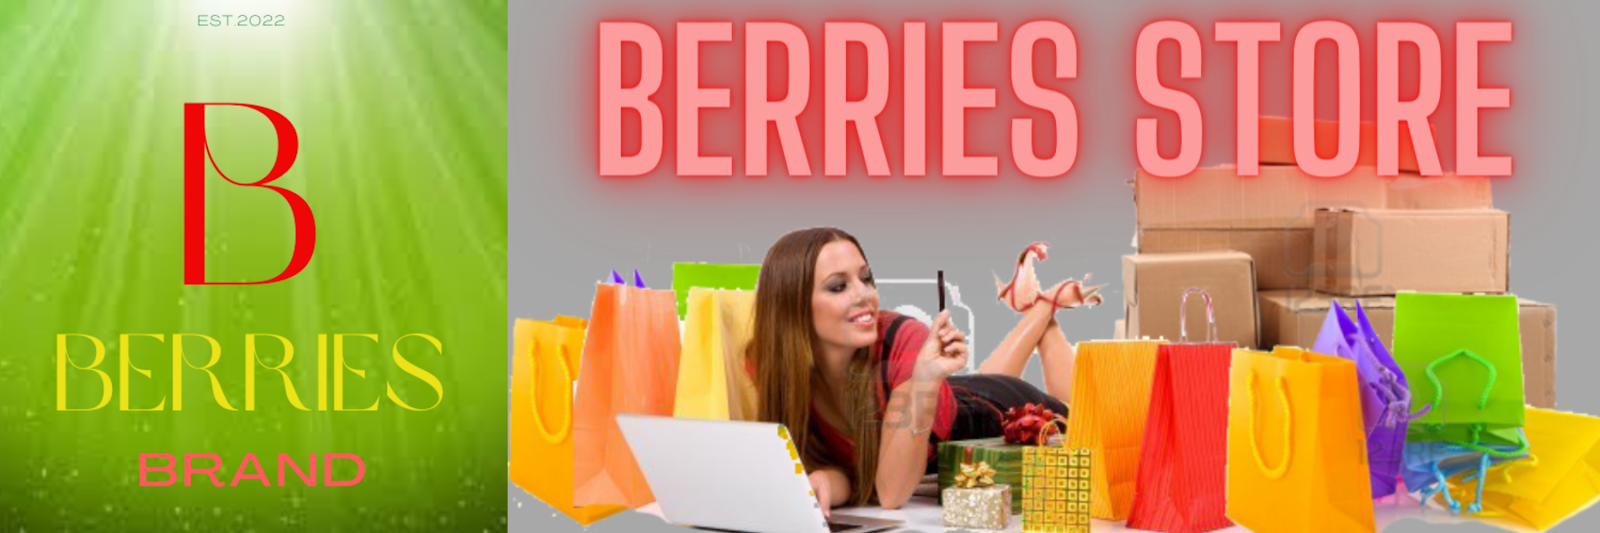 Berries Store